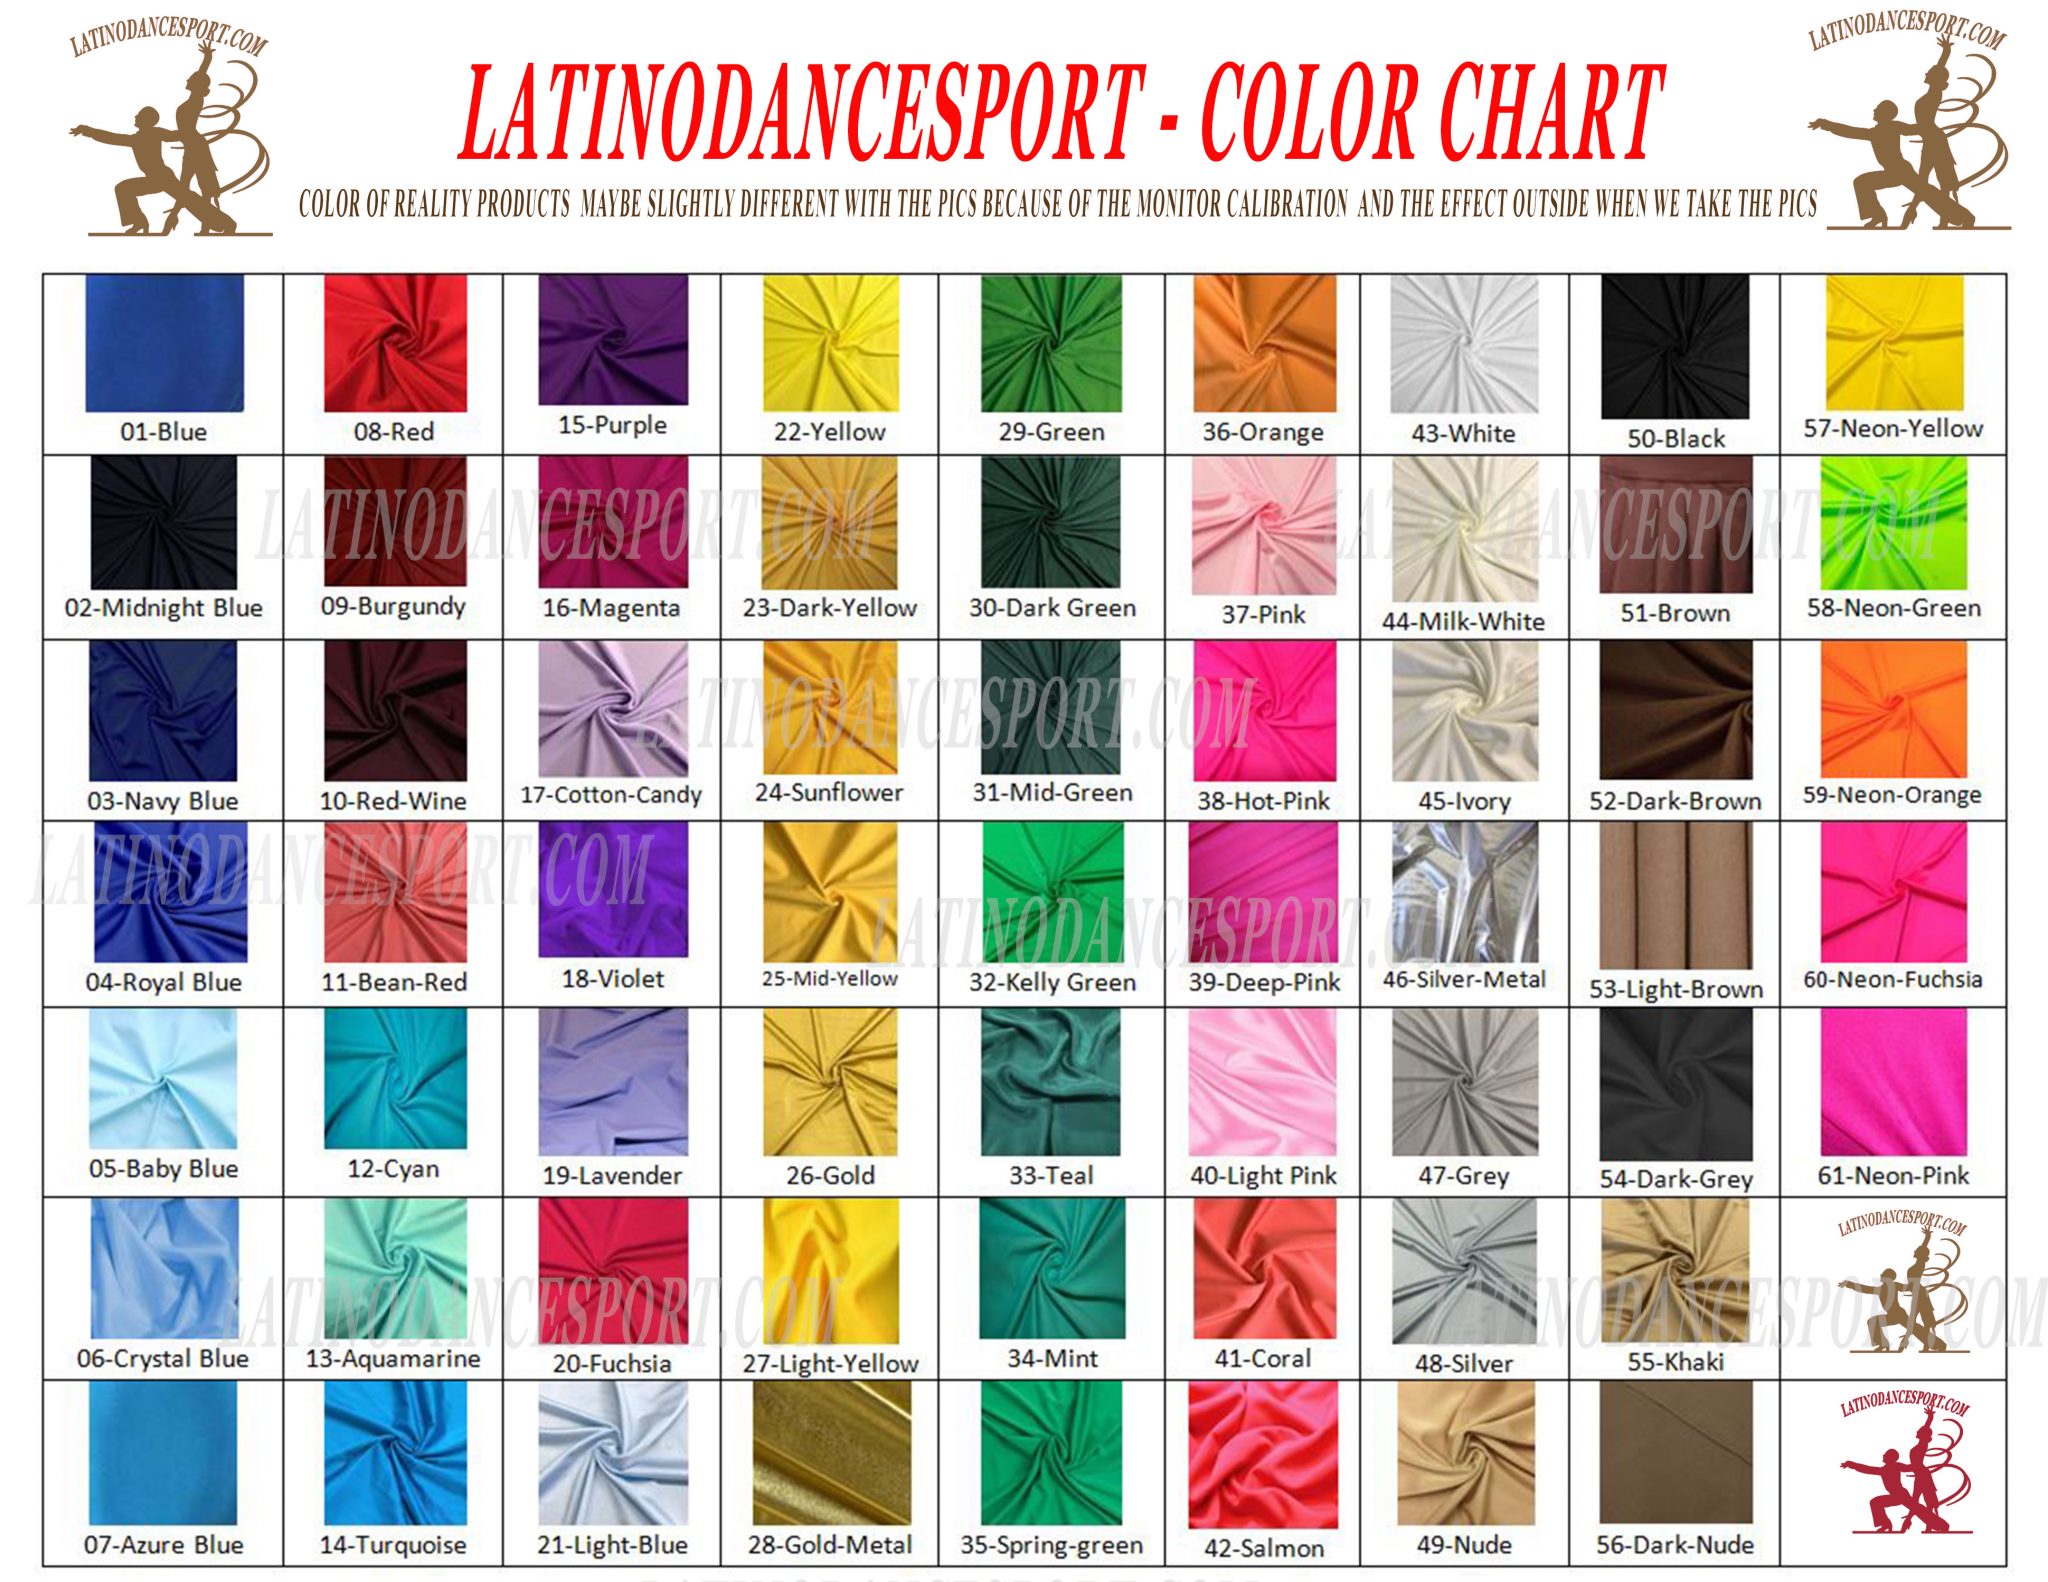 COLOR-latinodancesport.com latino dance sports dress latin smooth standard rhythm